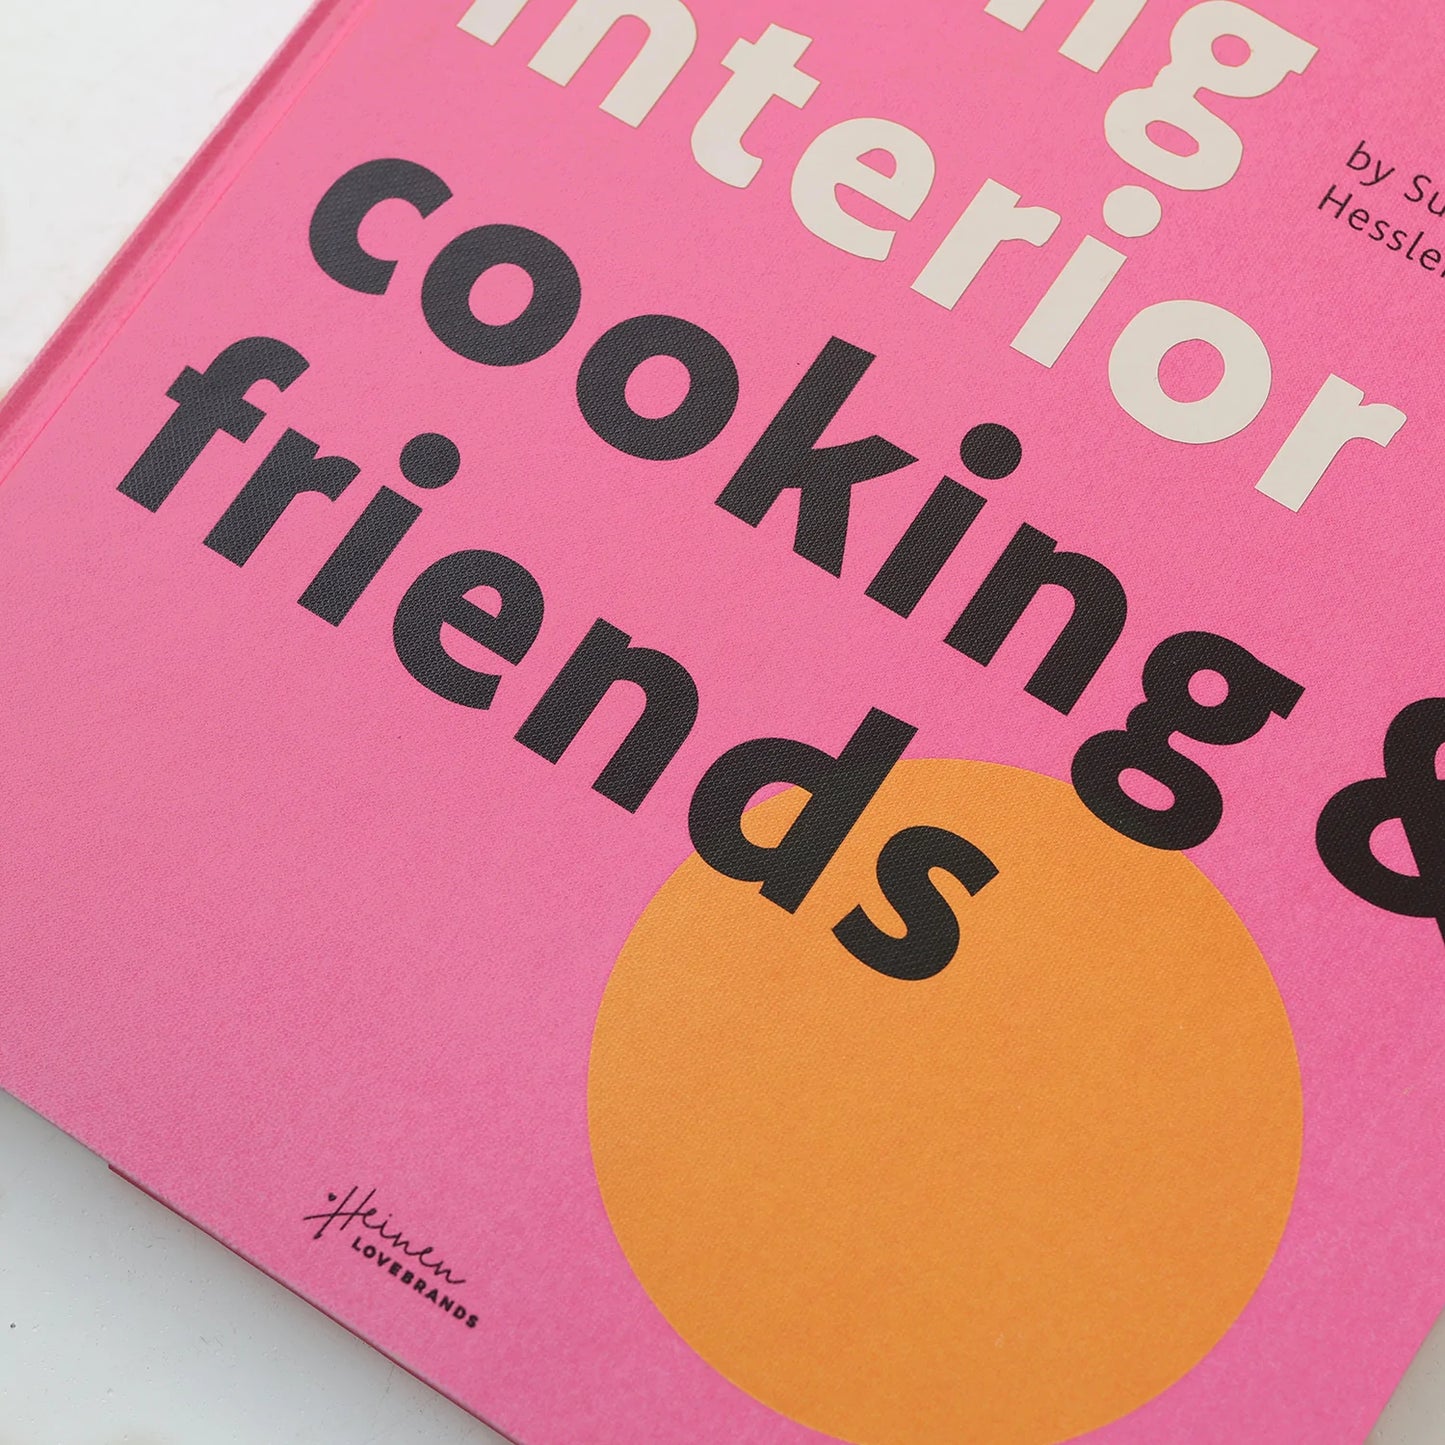 Table Book „sweetlivinginterior cooking & friends“